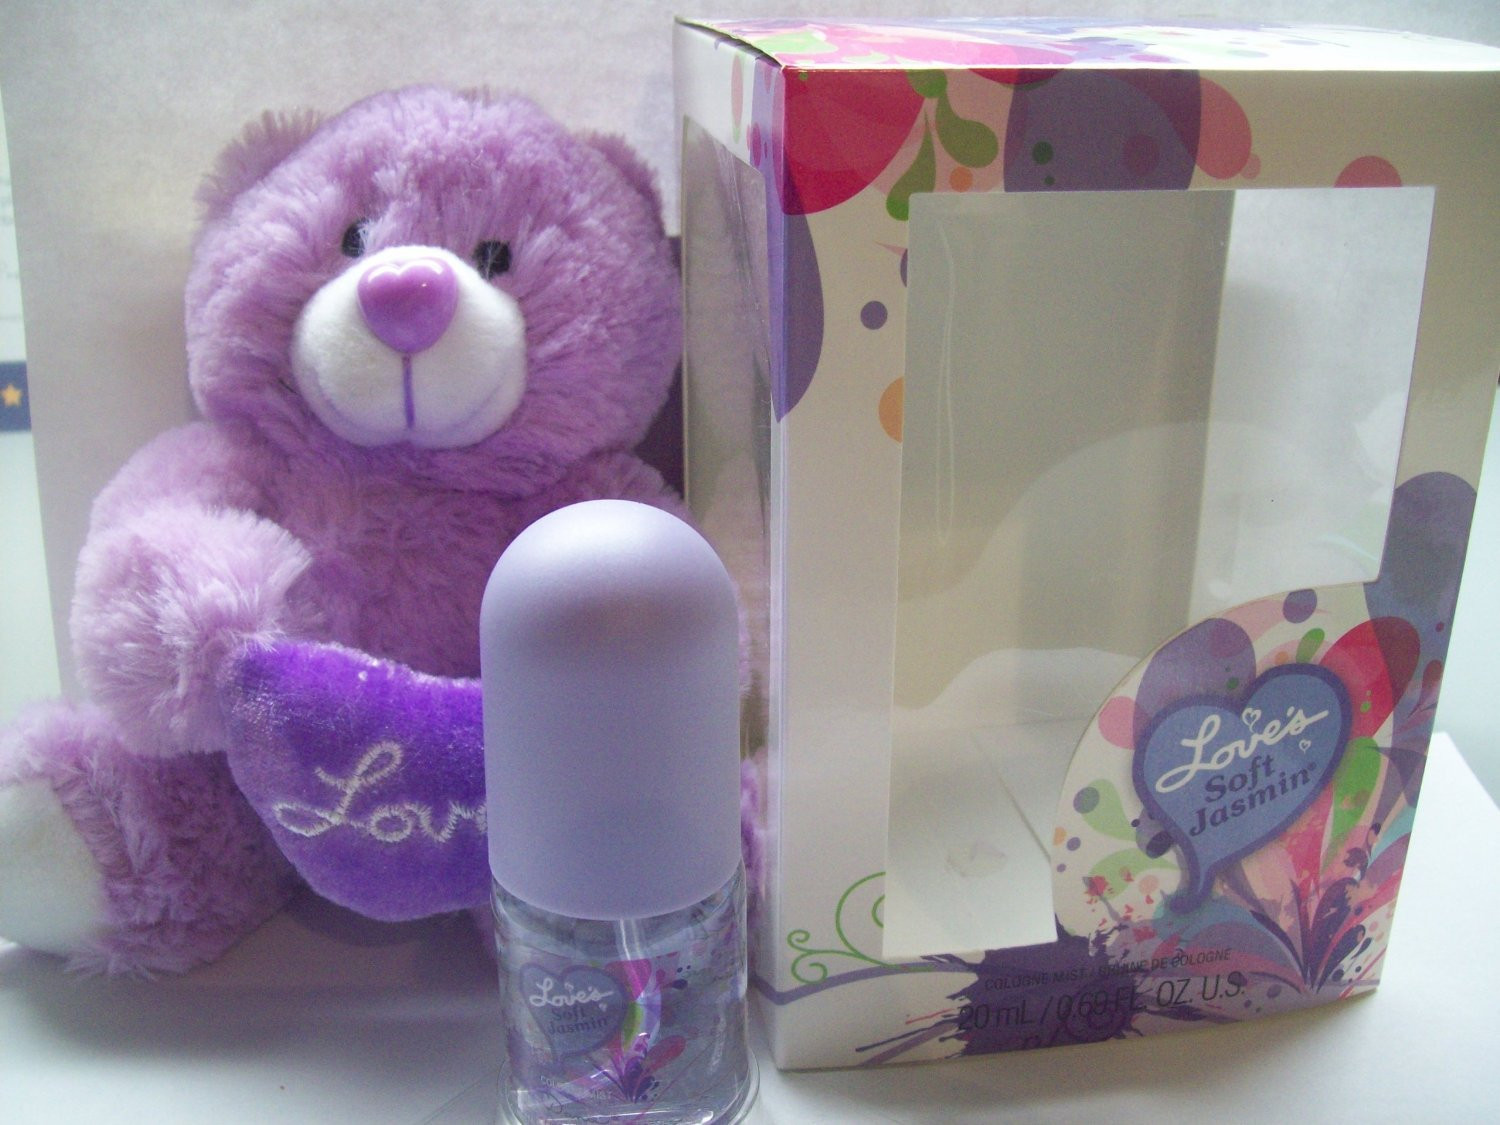 Baby Soft Perfume Gift Sets
 Amazon Dana Love s Baby Soft Gift Set with Teddy